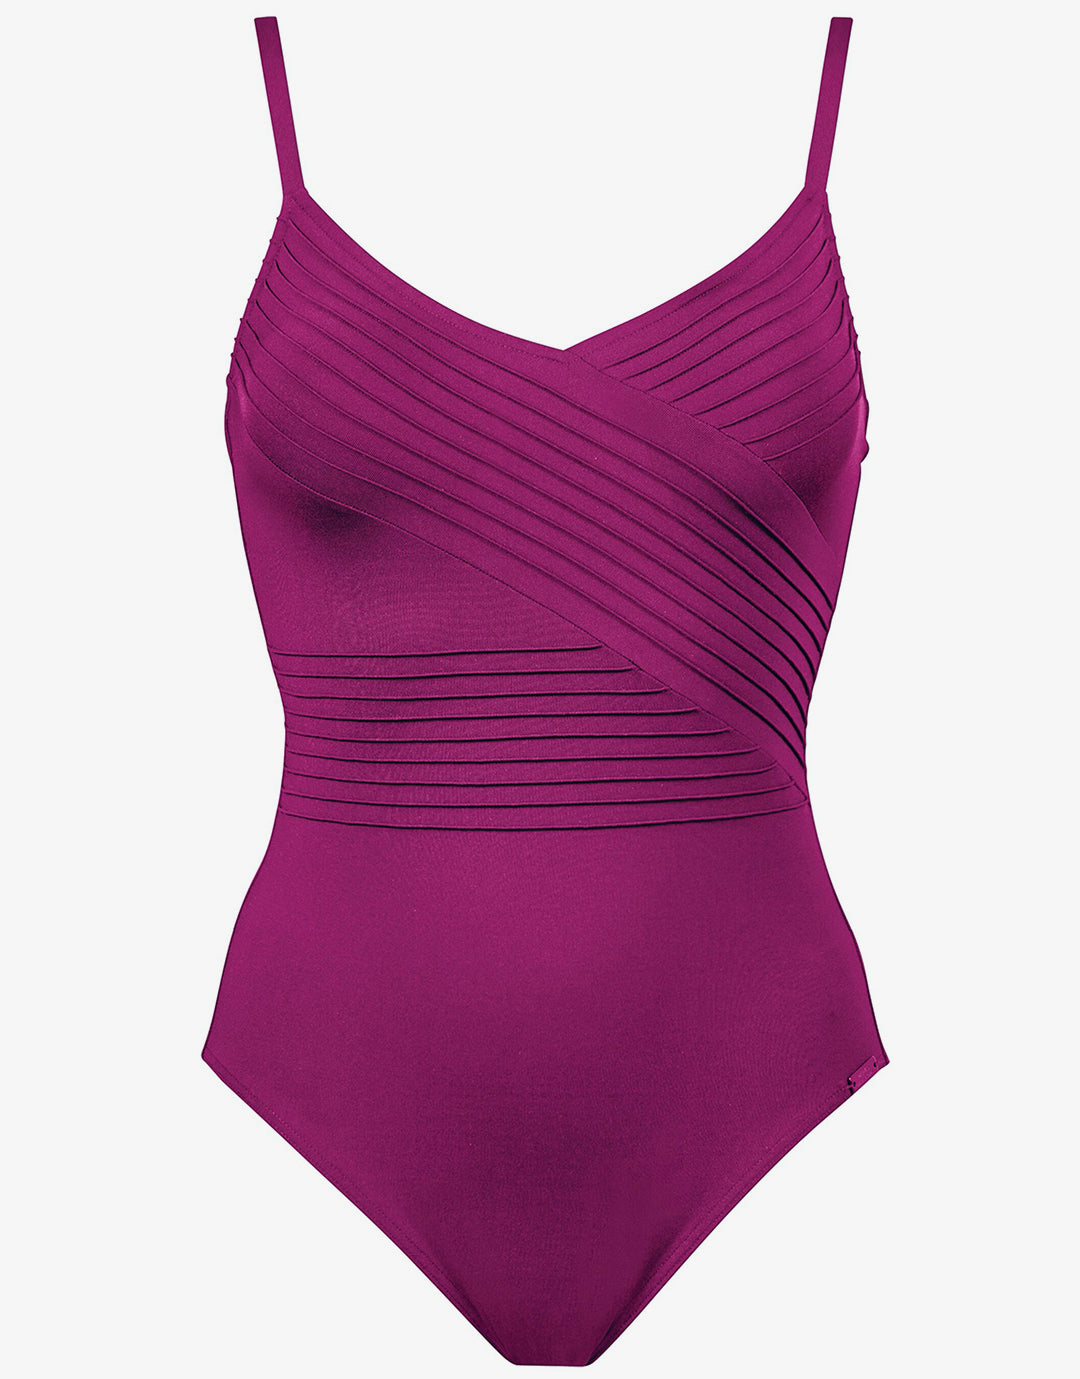 Softline Wrap Swimsuit - Magenta - Simply Beach UK